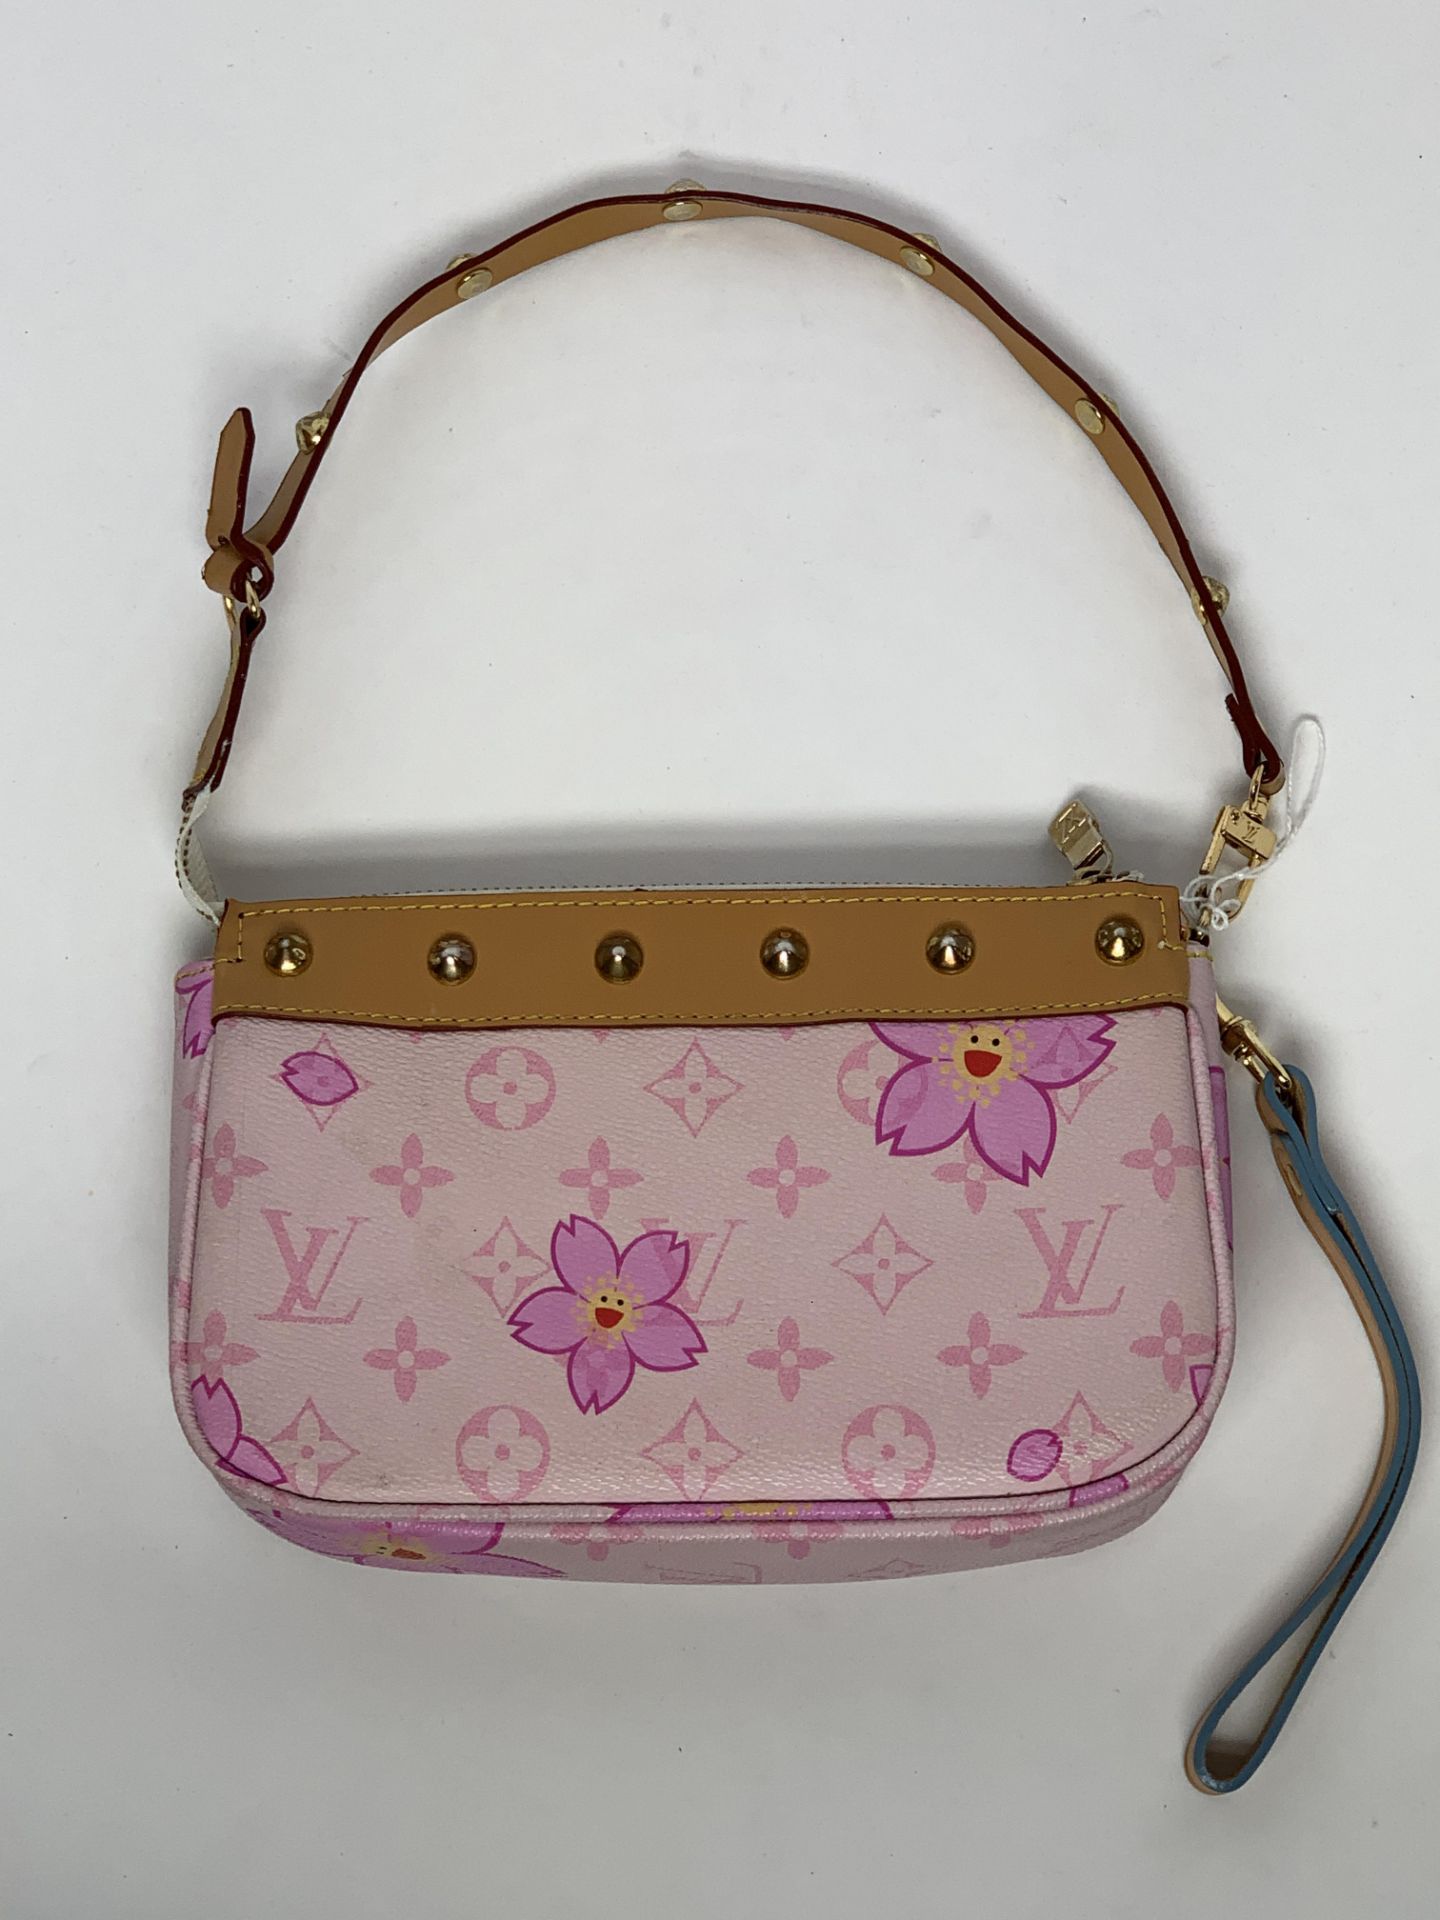 Louis Vuitton LV Luxury Shoulder Handbag Purse Clutch Wristlet, Pink, Flower Print, Interior Pocket - Image 4 of 6